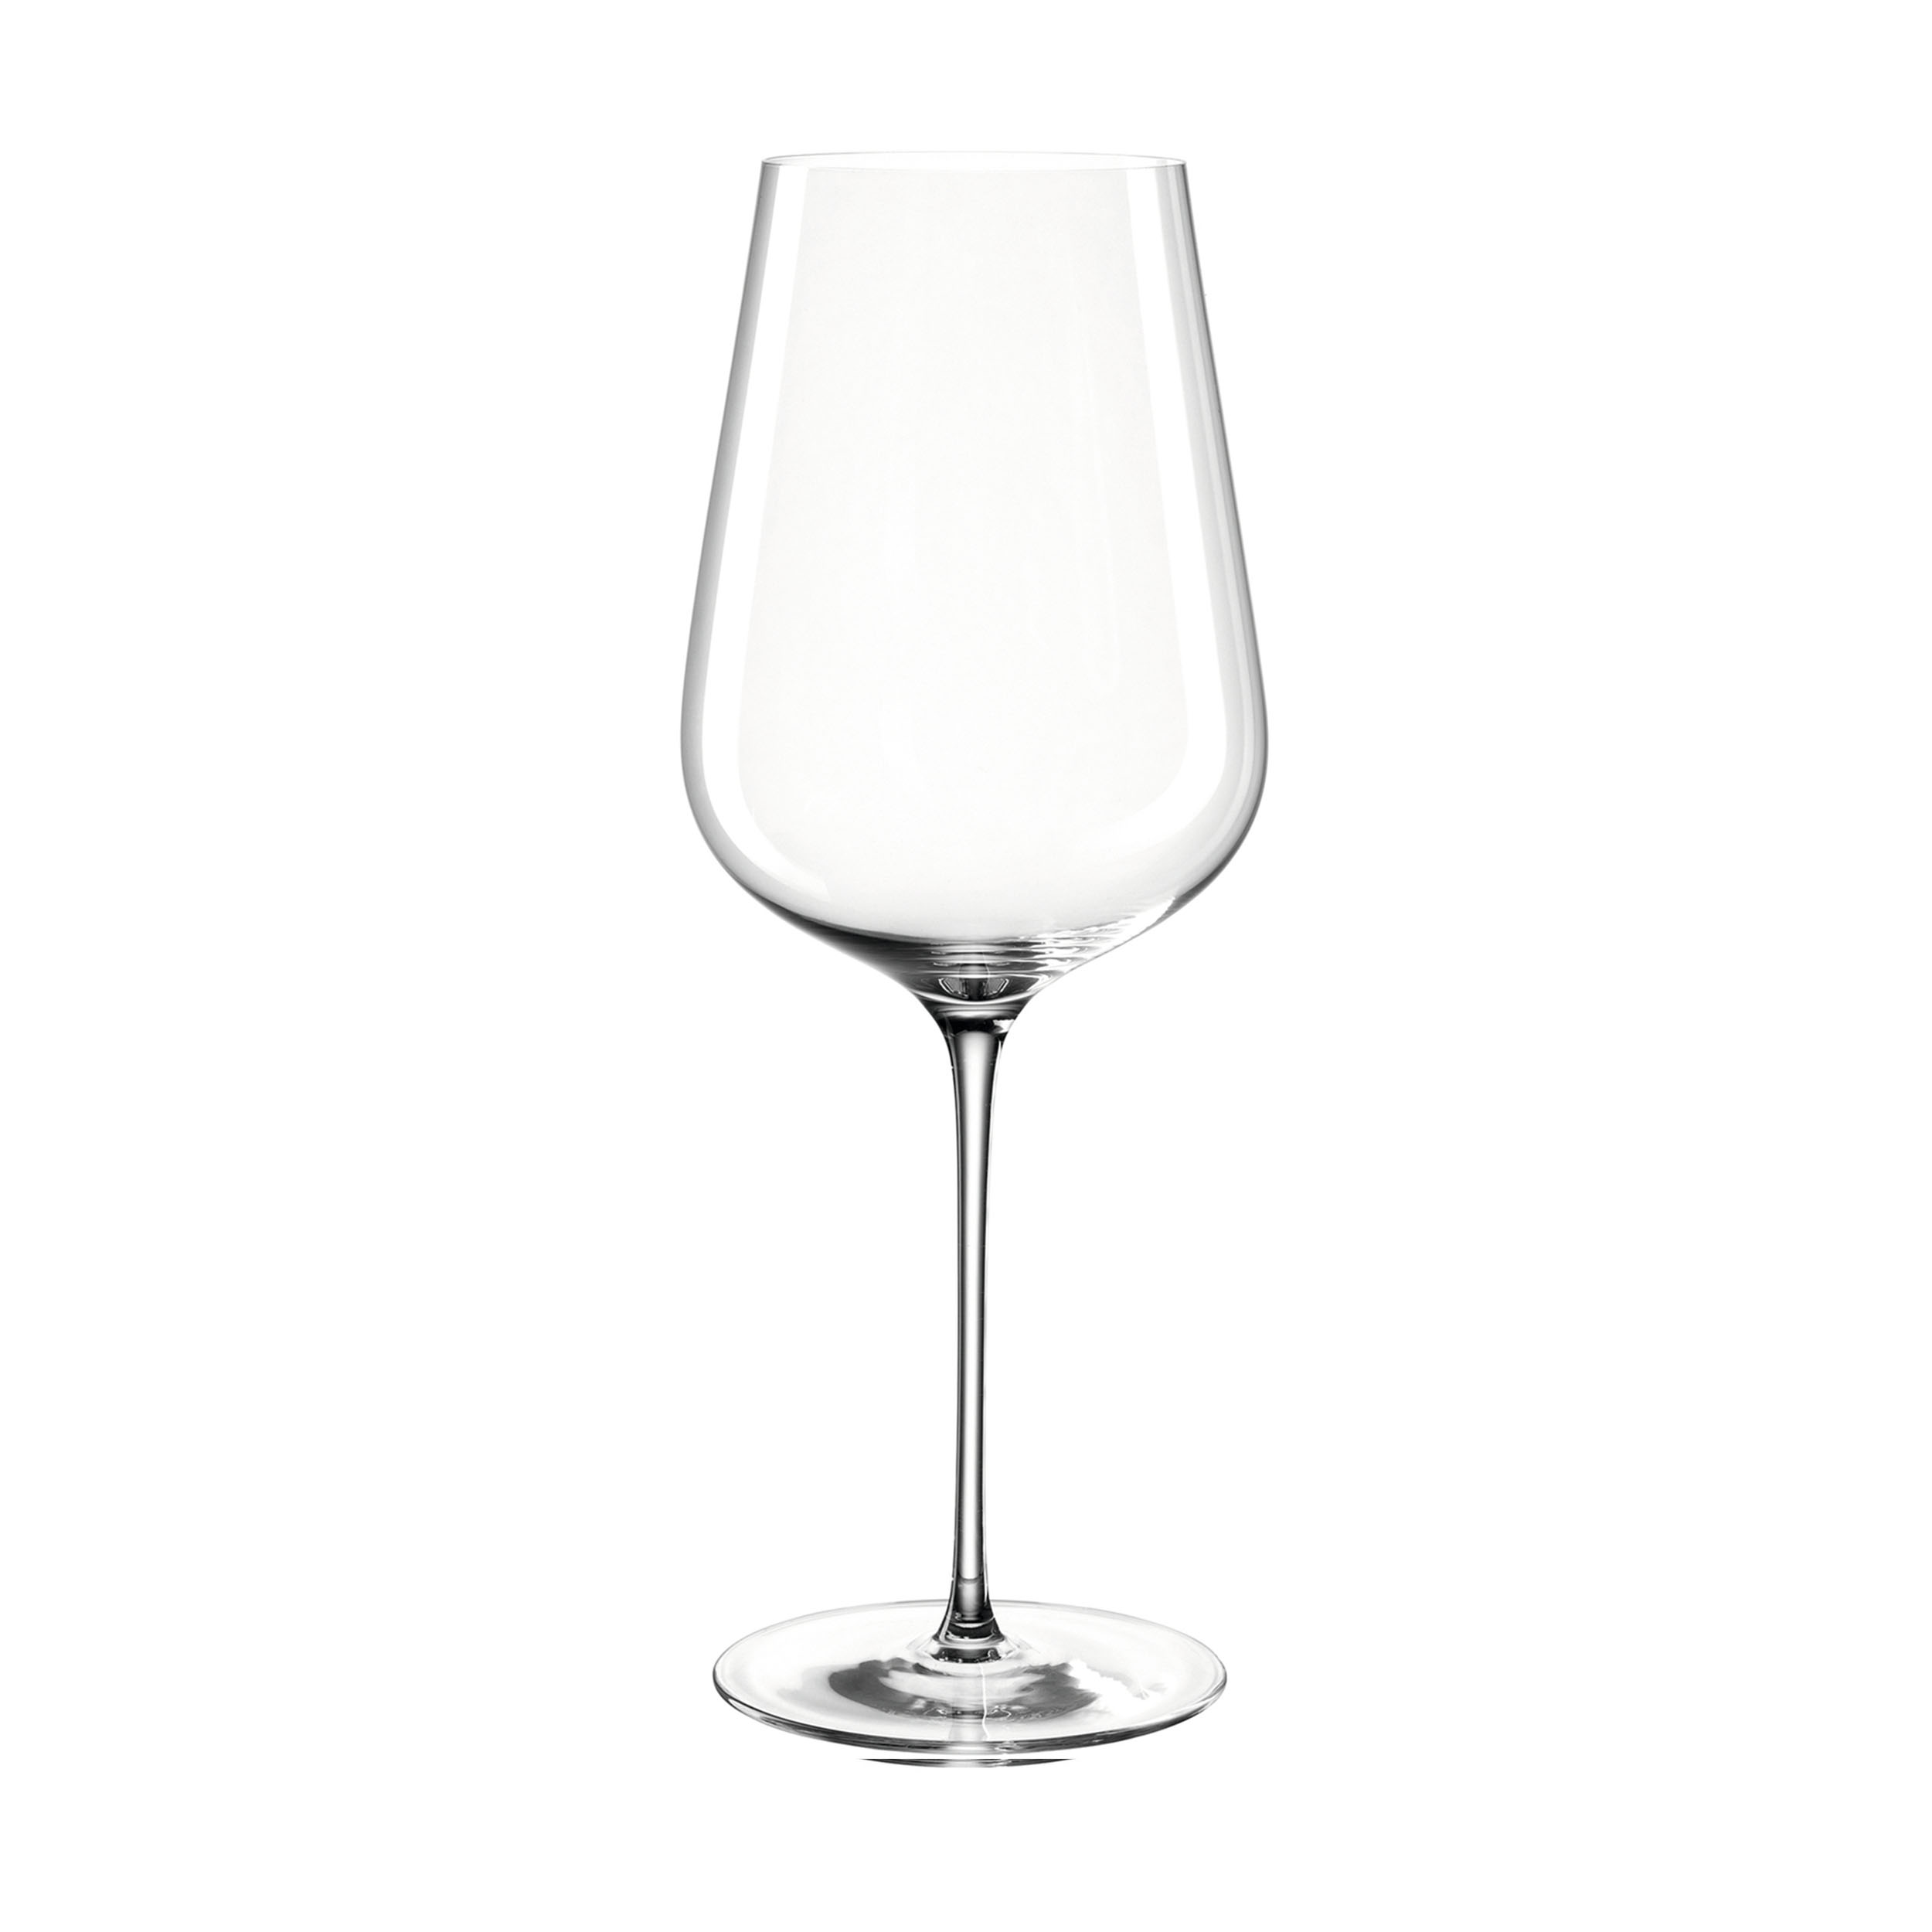 Brunelli Rotweinglas